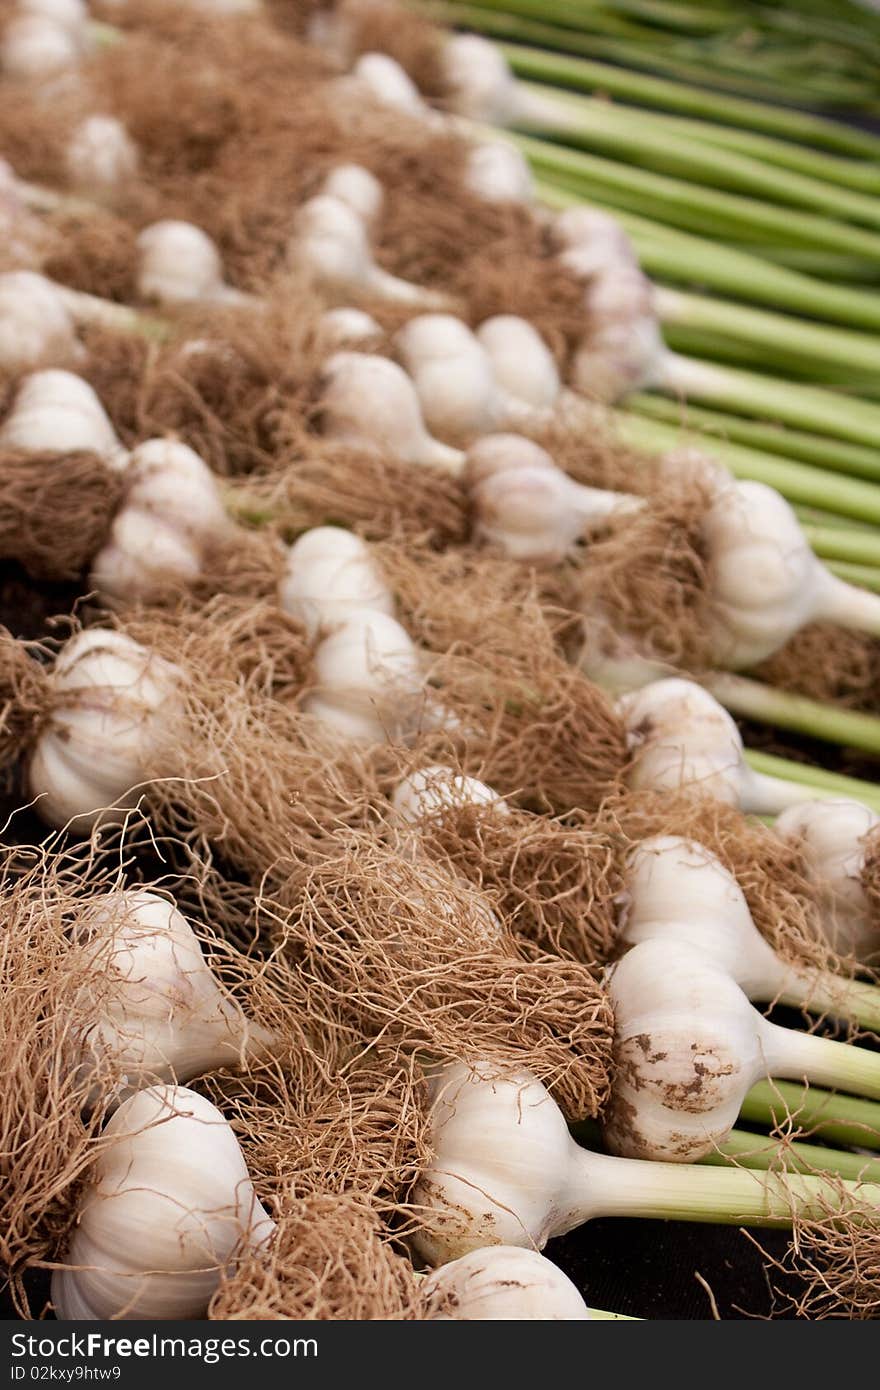 Fresh, organic garlic for sale at the local farmers market